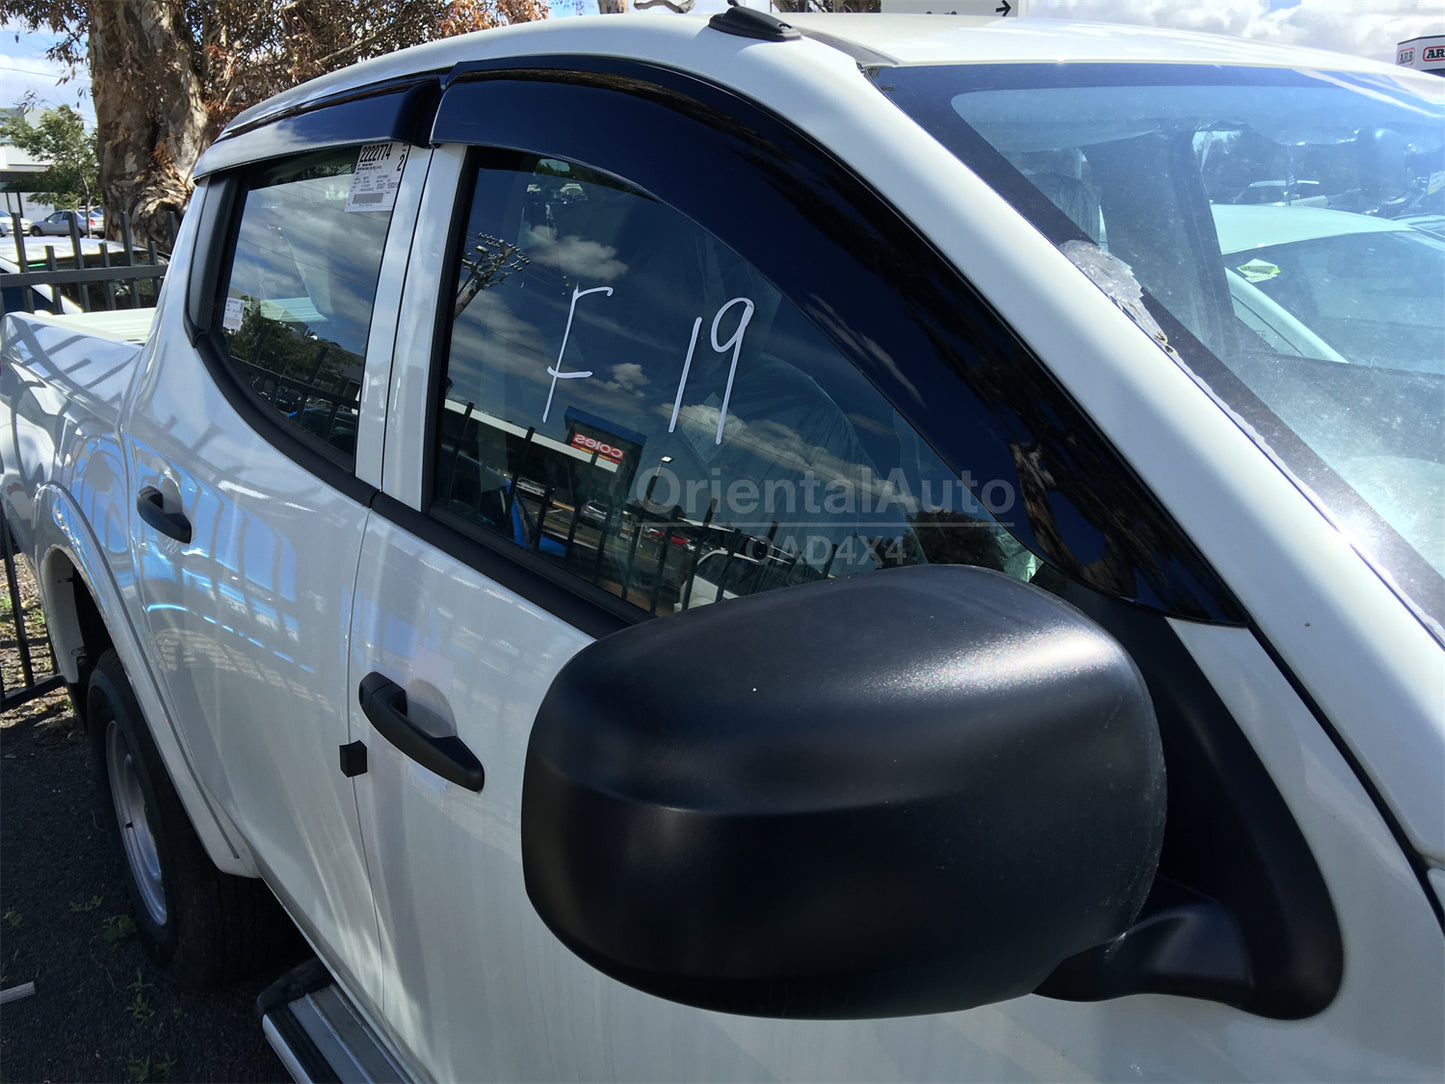 Injection Bonnet Protector & Weathershields for Mitsubishi Triton MQ Dual Cab 2015-2018 Weather Shields Window Visor + Hood Protector Bonnet Guard